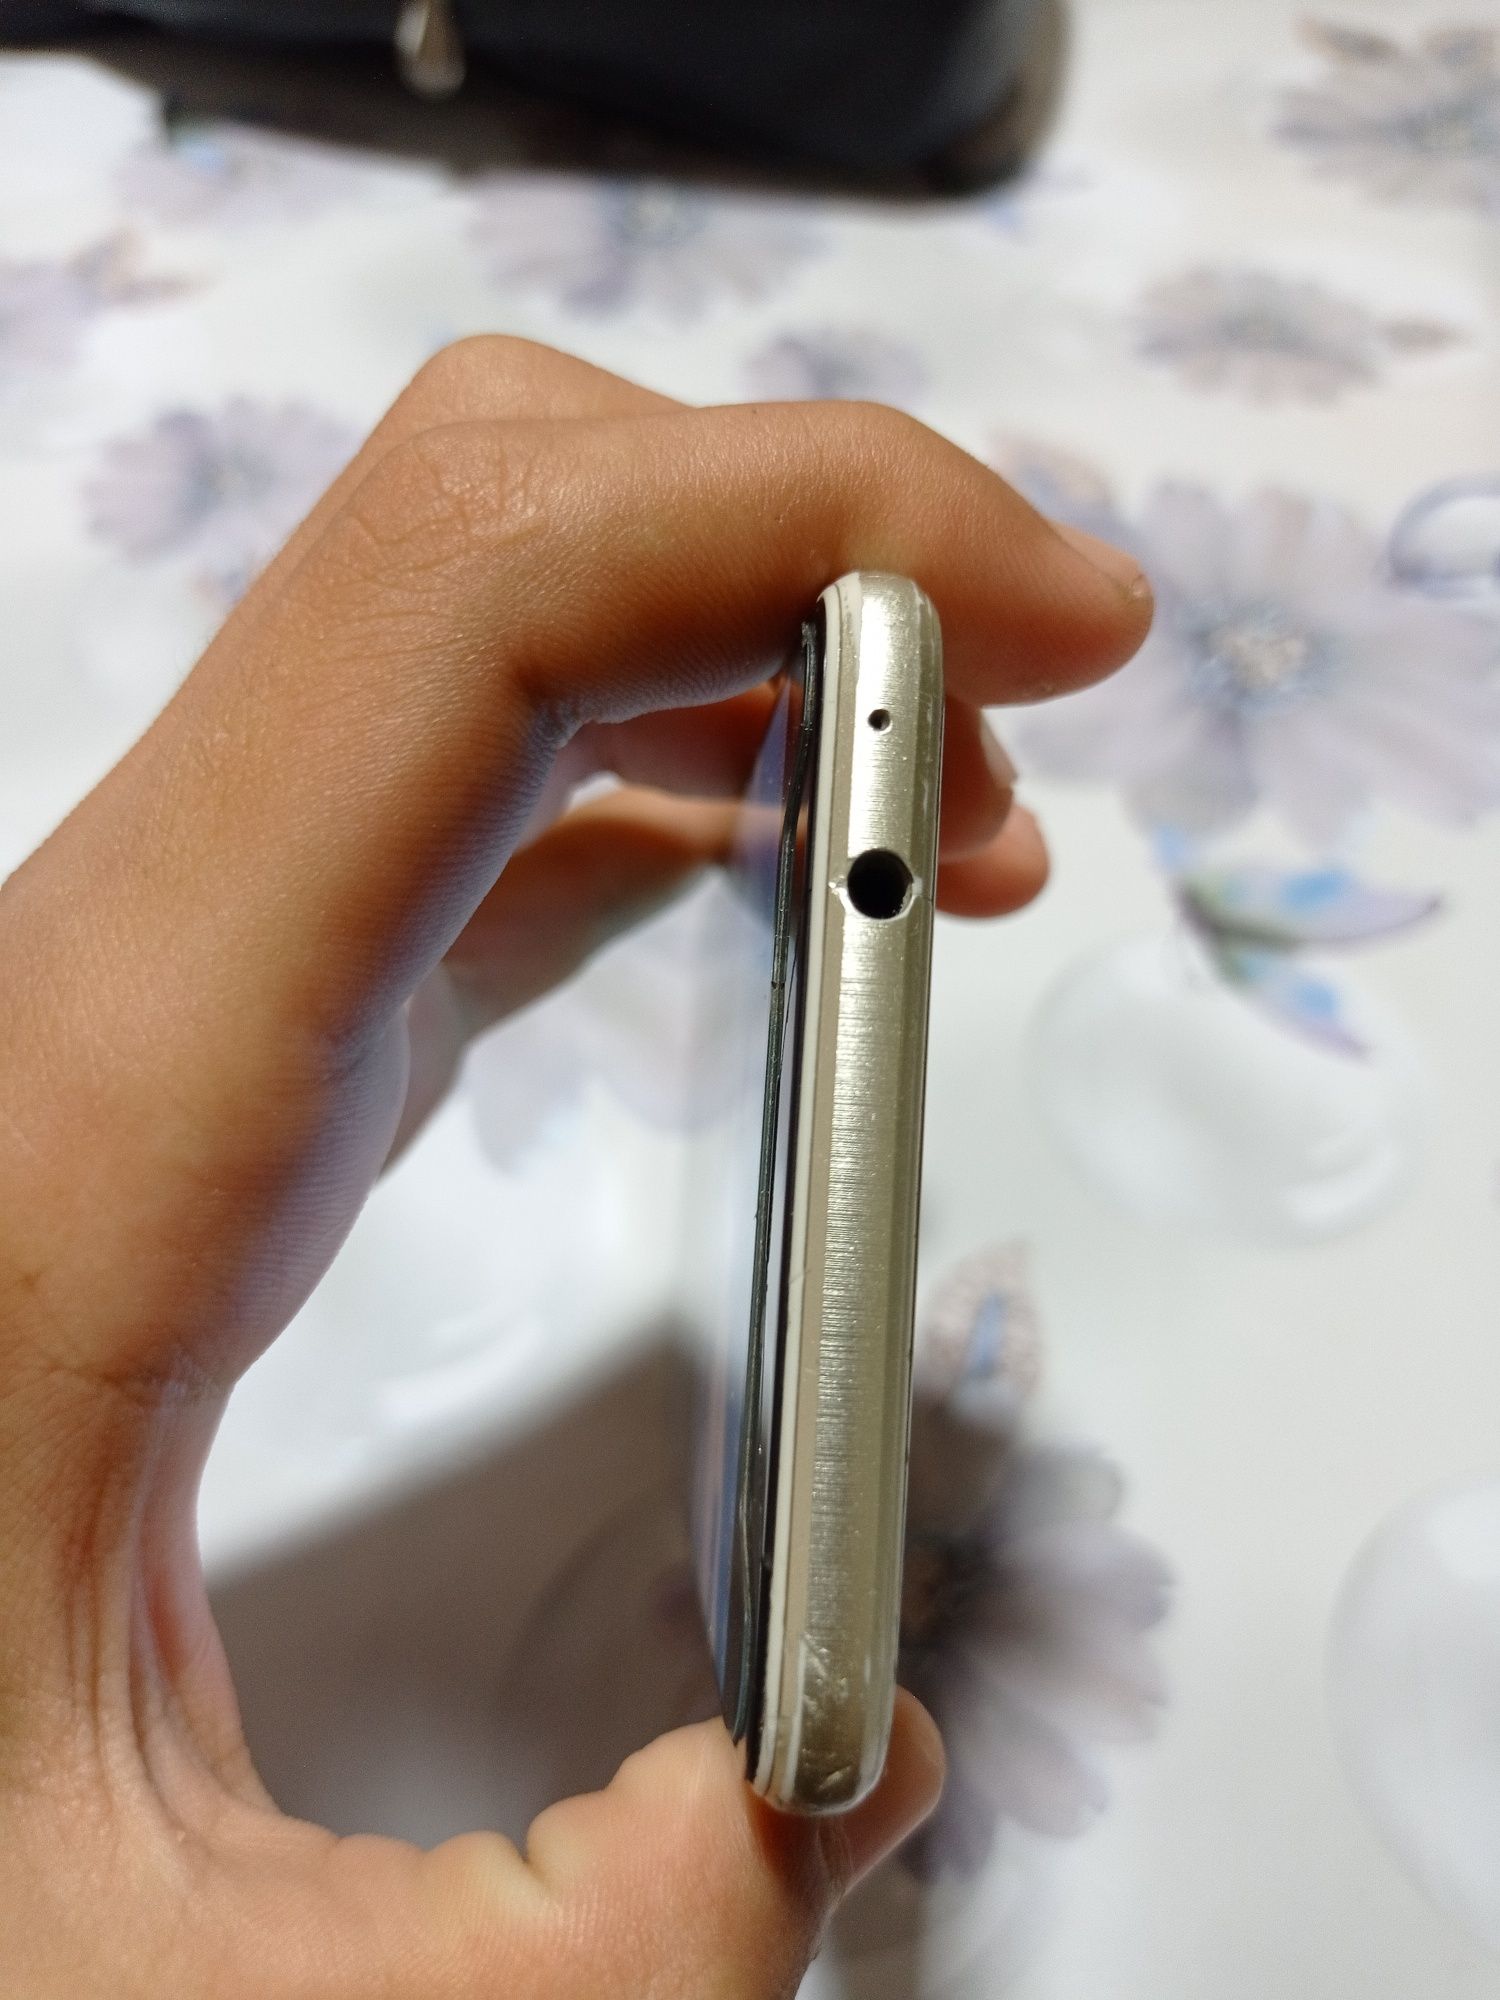 Huawei p8 Lite srocno narhini kelishamiz